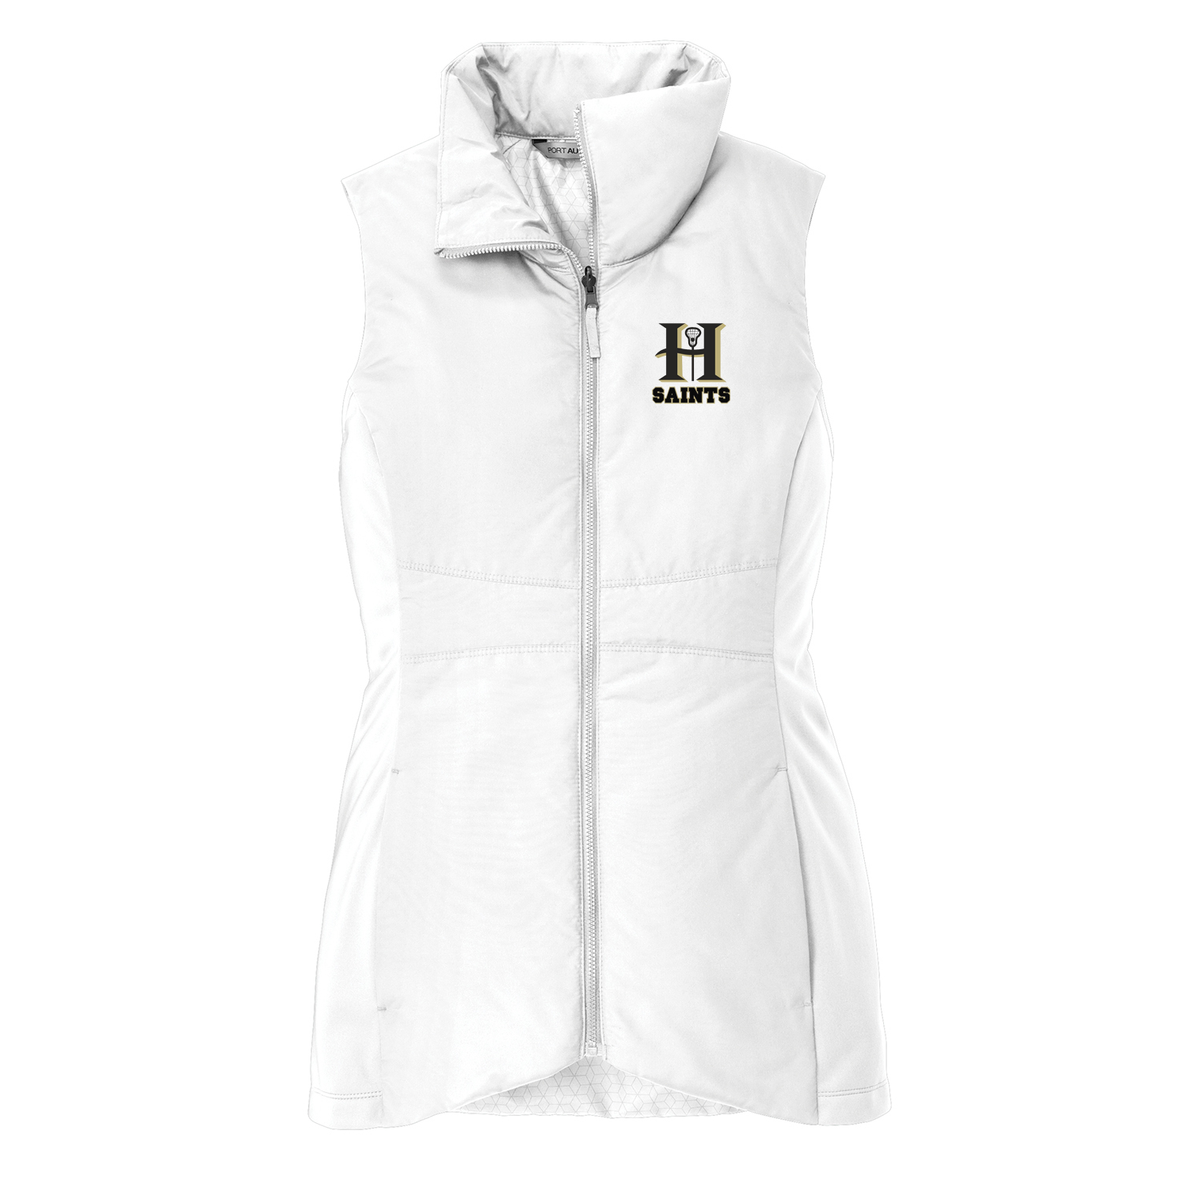 HAYLA Saints Women's White Vest